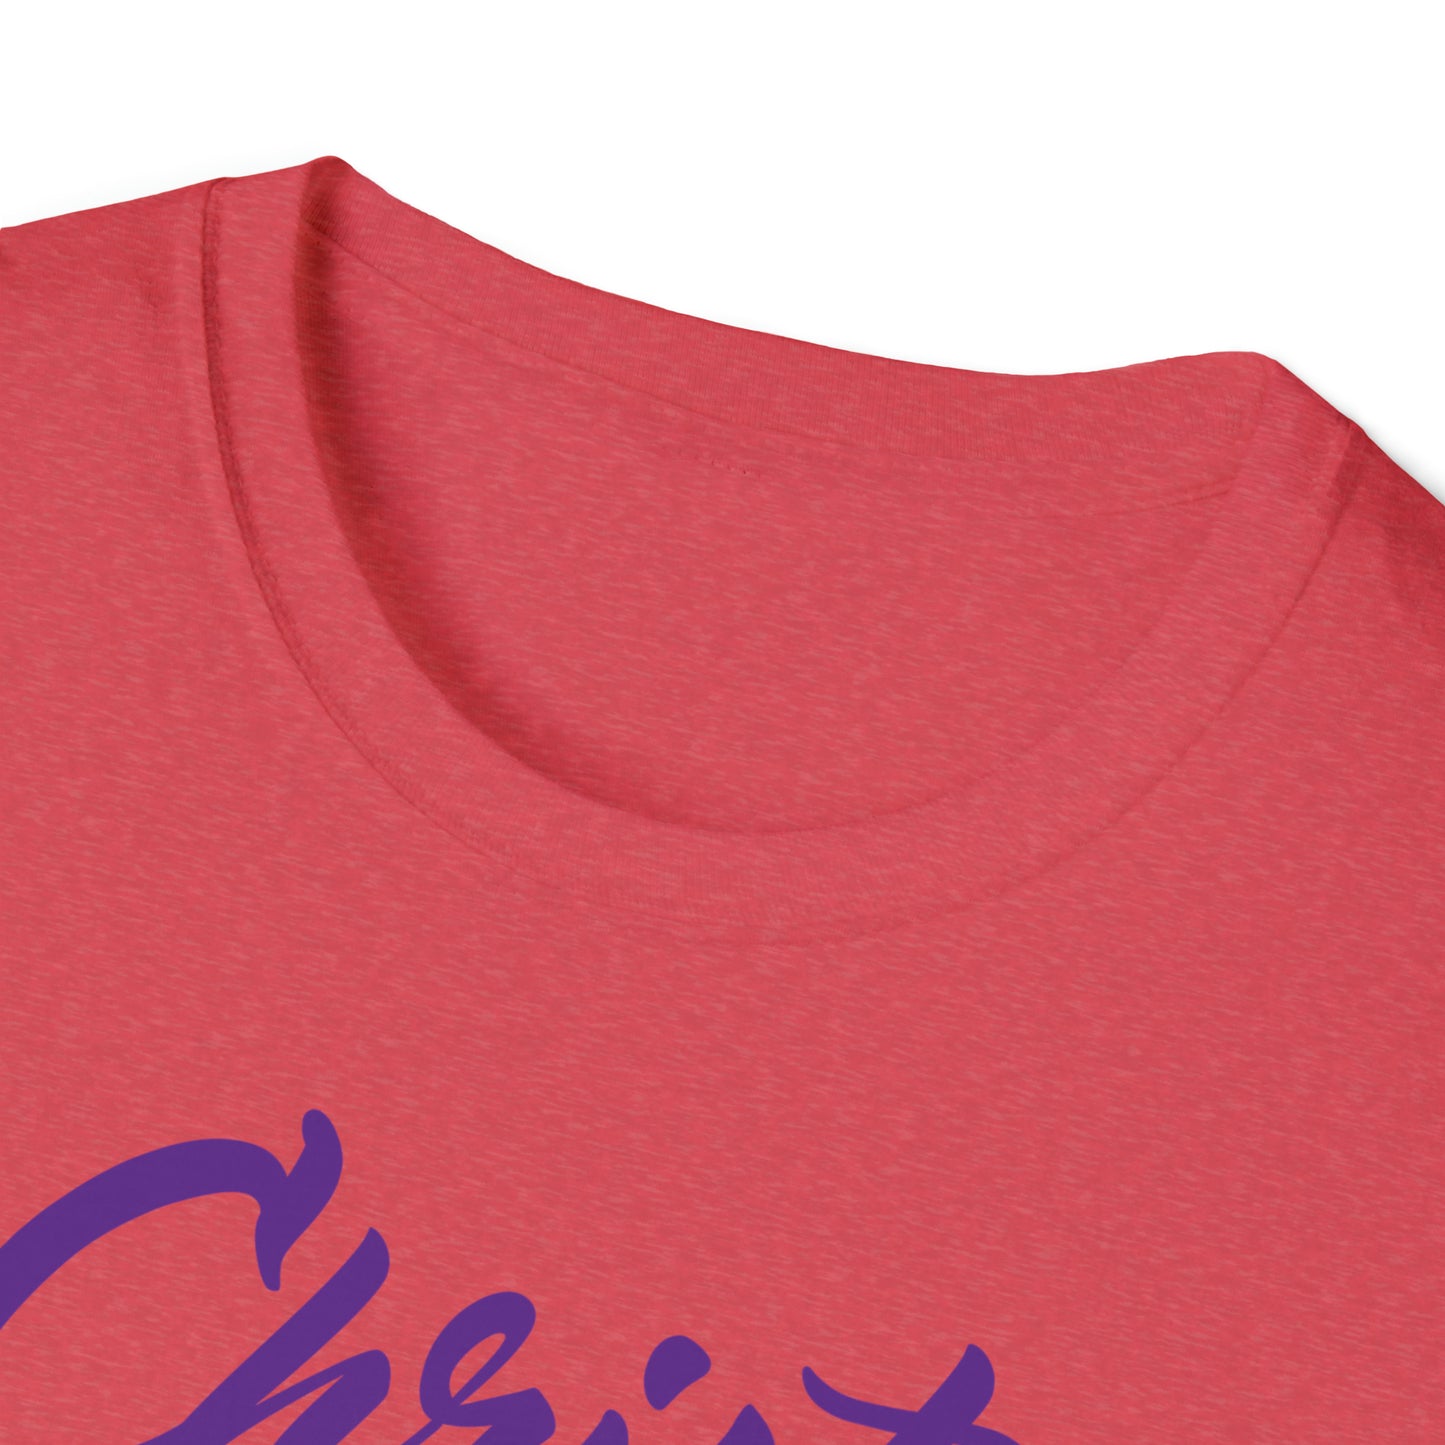 Christ Influencer front SELFLESS back | Unisex Softstyle T-Shirt